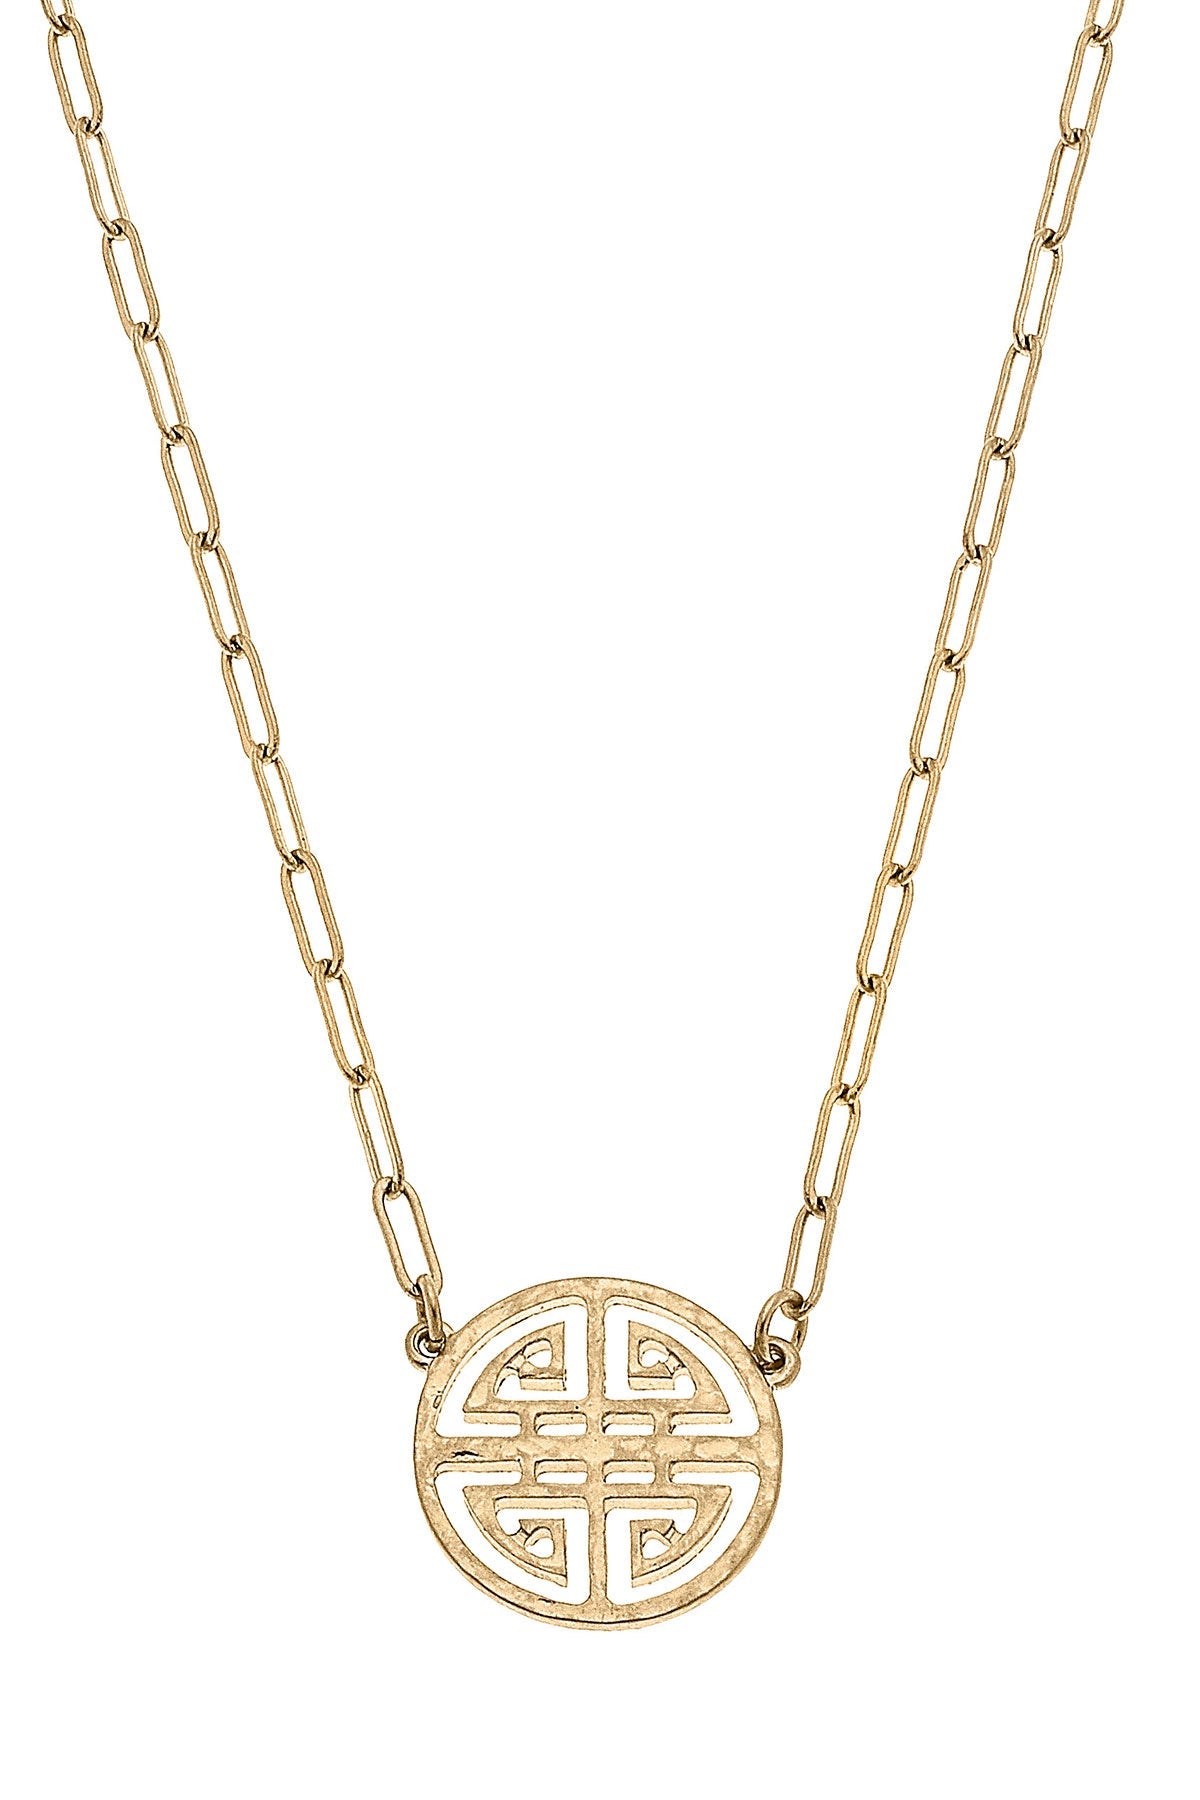 Aria Greek Keys Necklace in Worn Gold